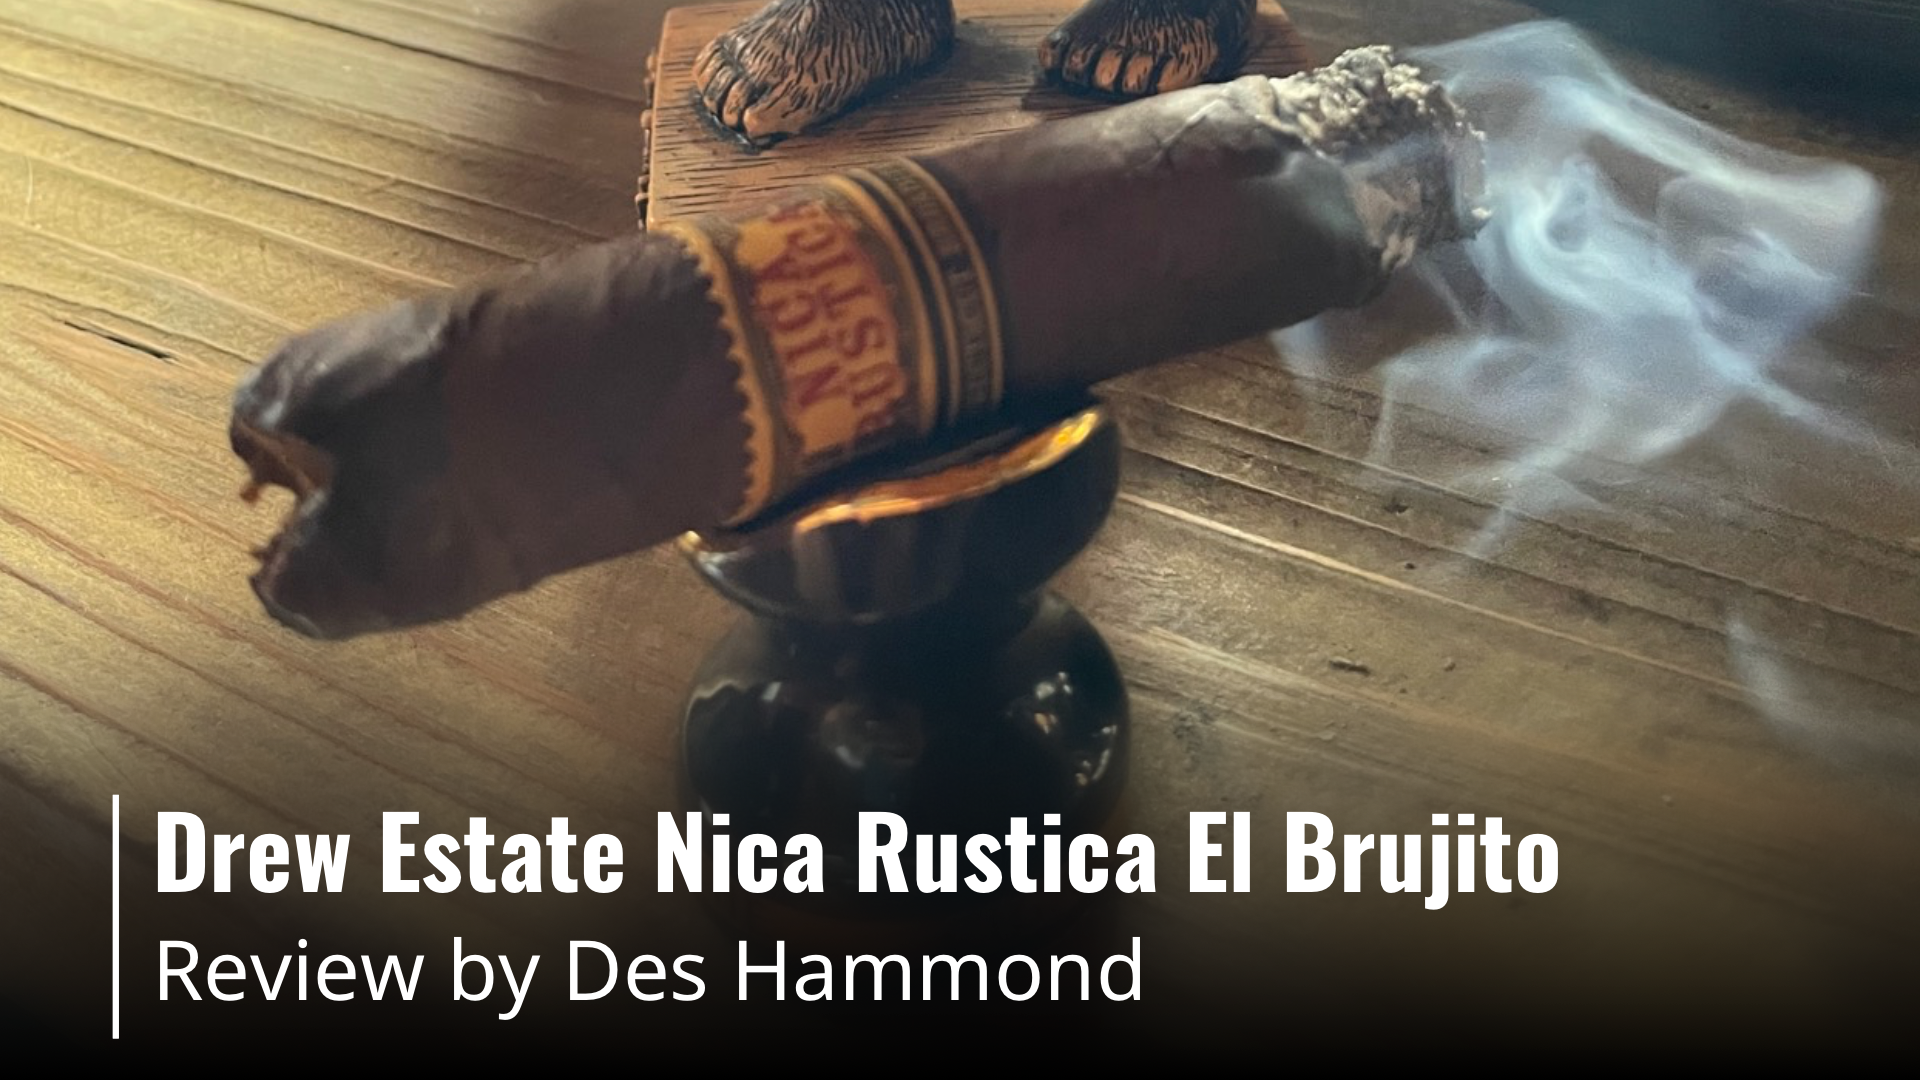 Drew Estate Nica Rustica El Brujito Review by Des Hammond